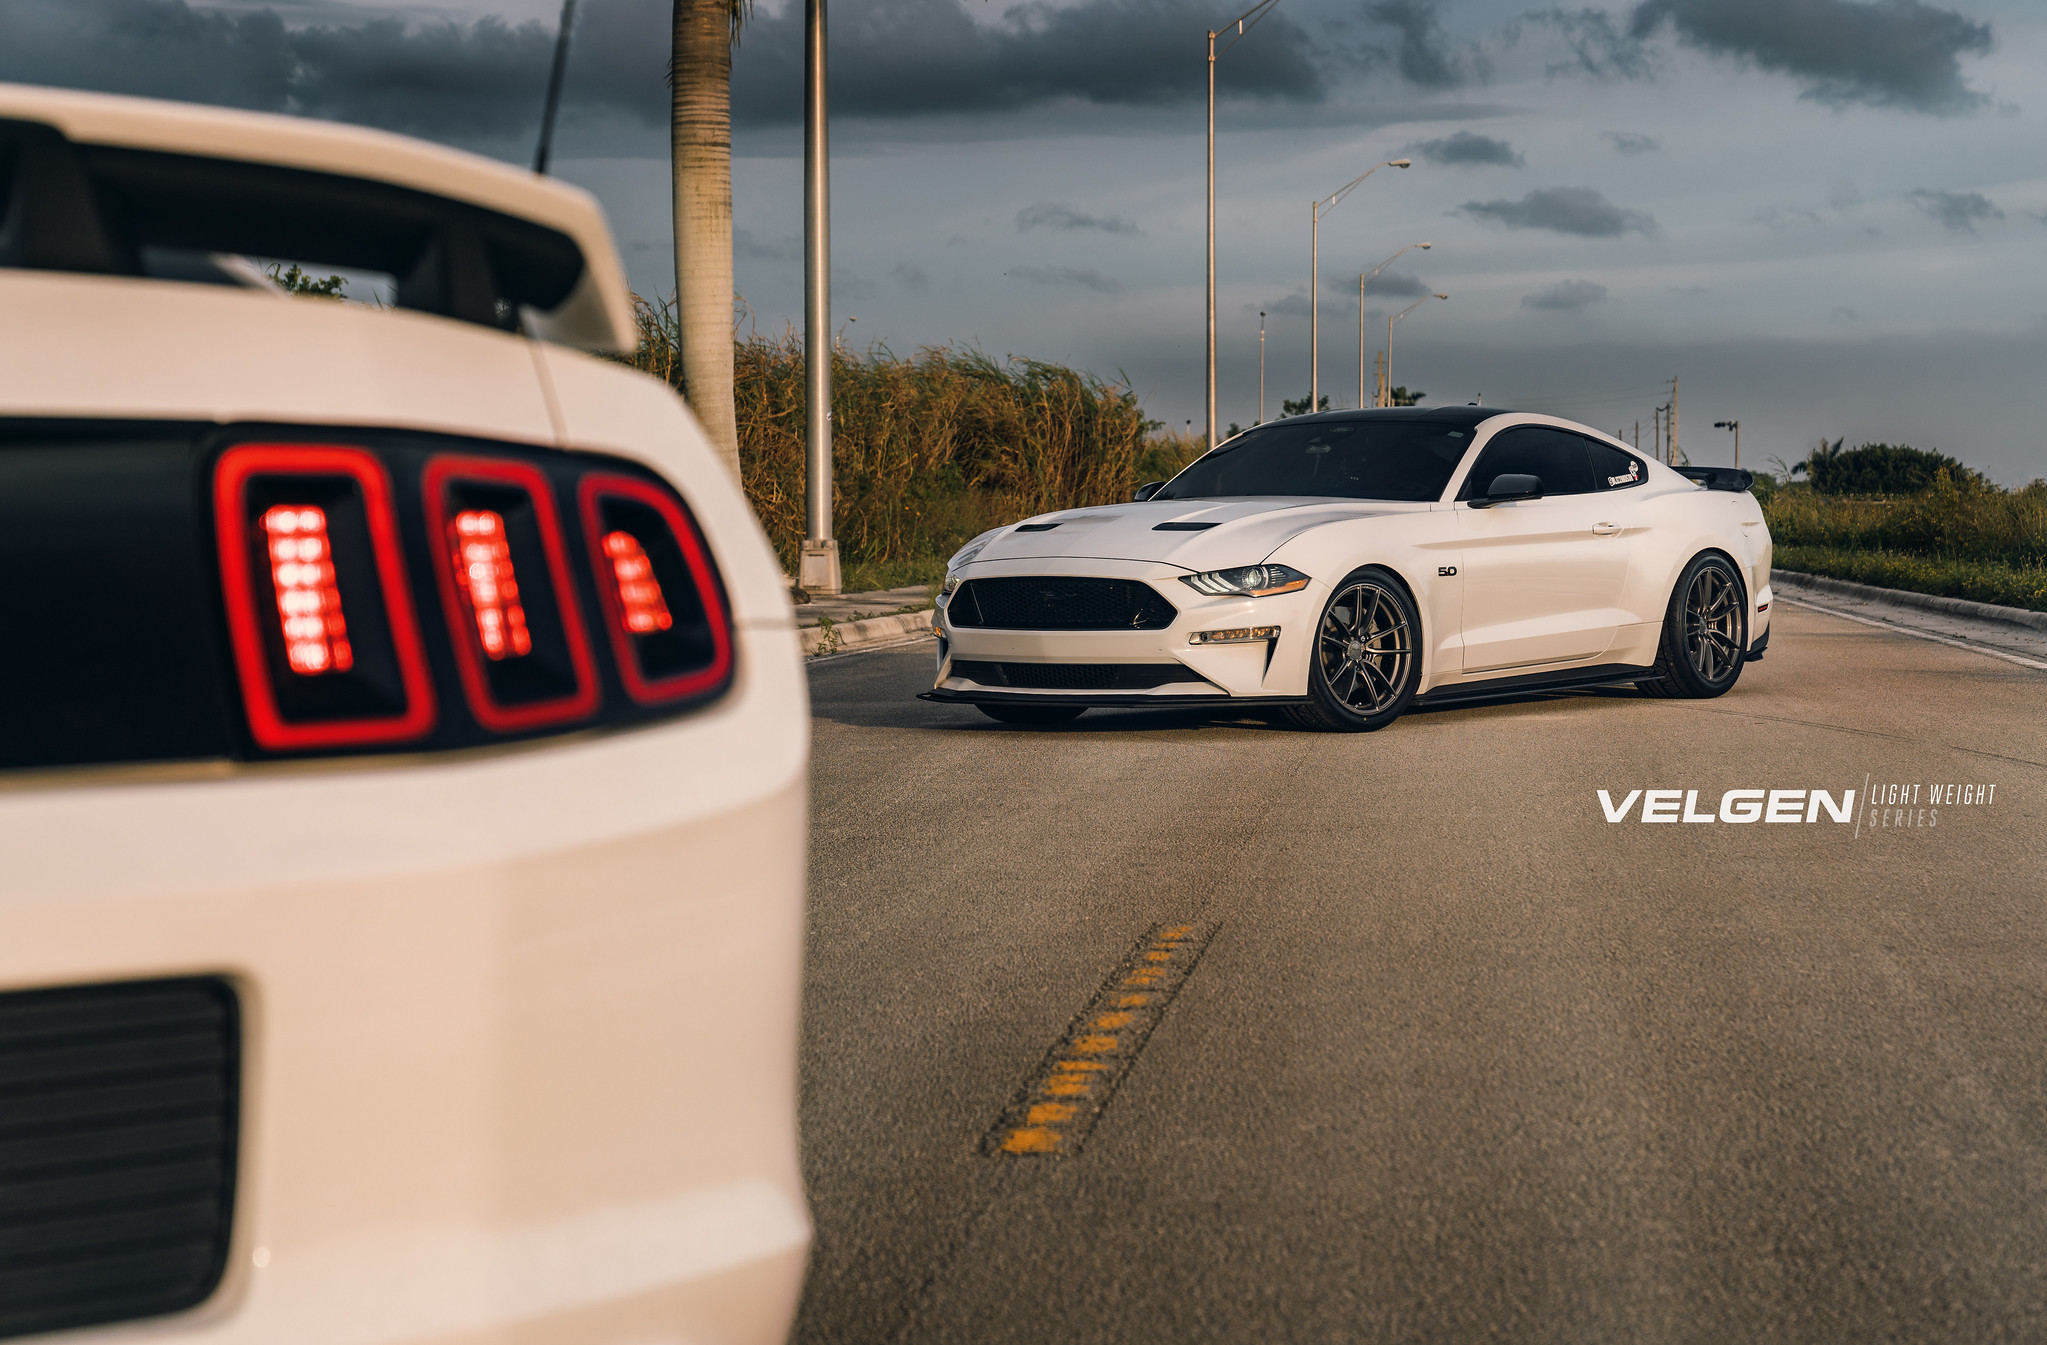 S650 Mustang Velgen wheels for your S650 Mustang | Vibe Motorsports 52576254018_da5a976881_k